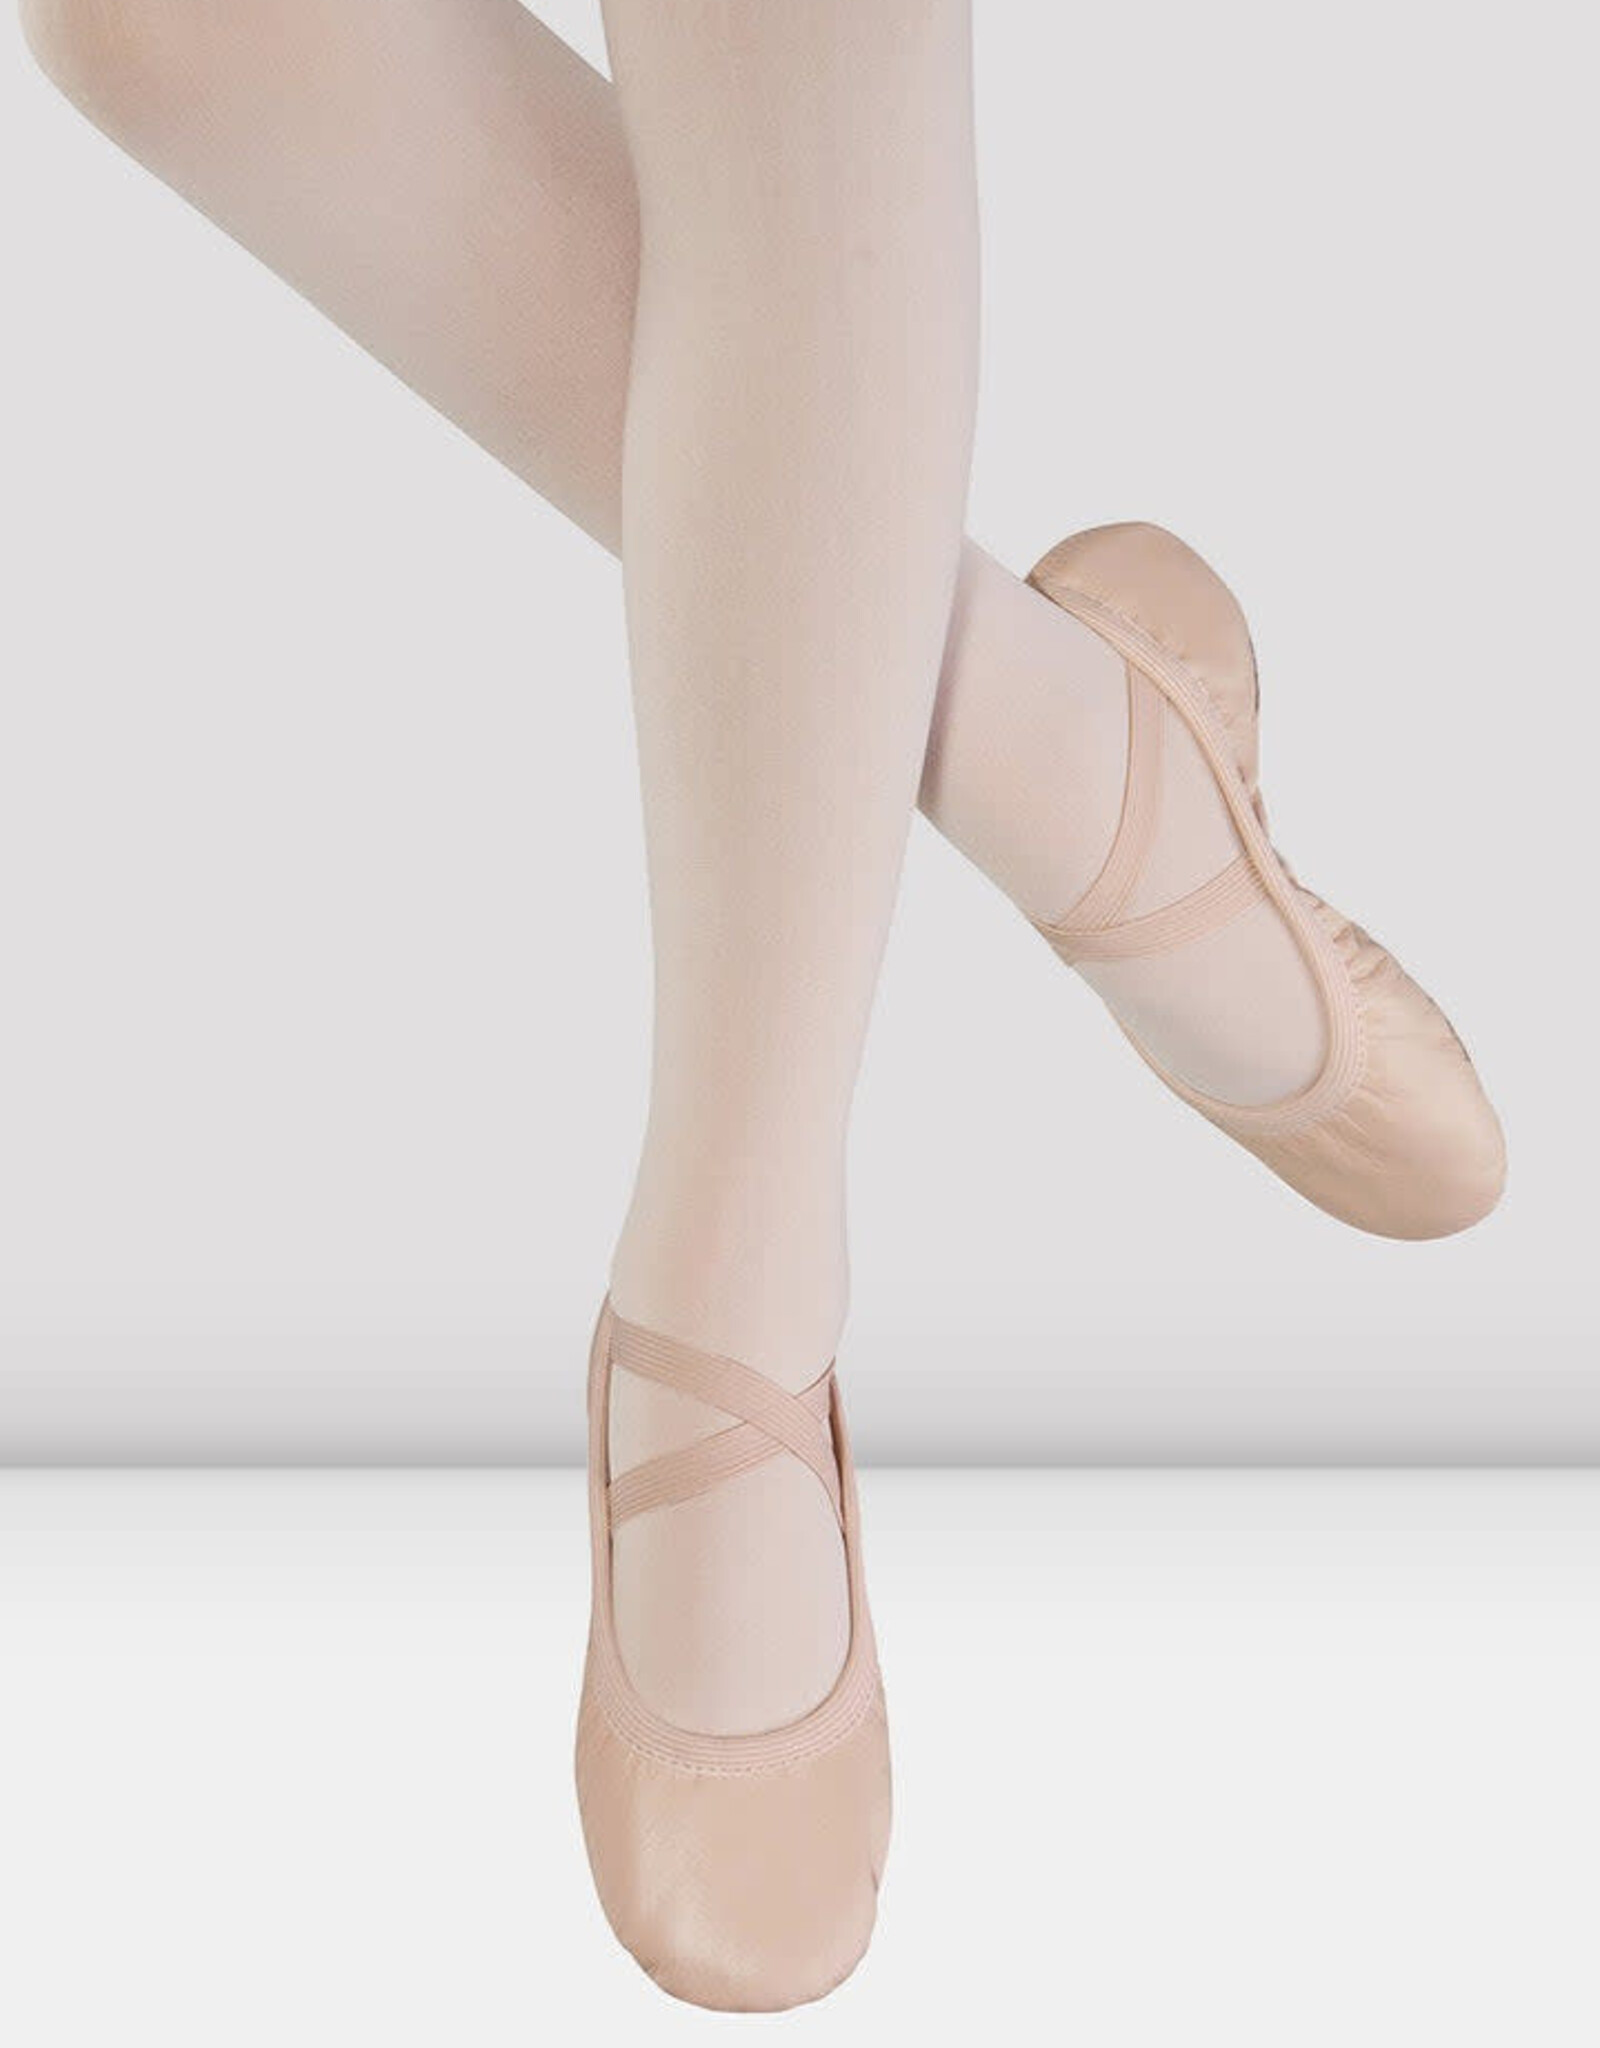 Bloch S0246L Odette Leather Ballet Shoes Adult